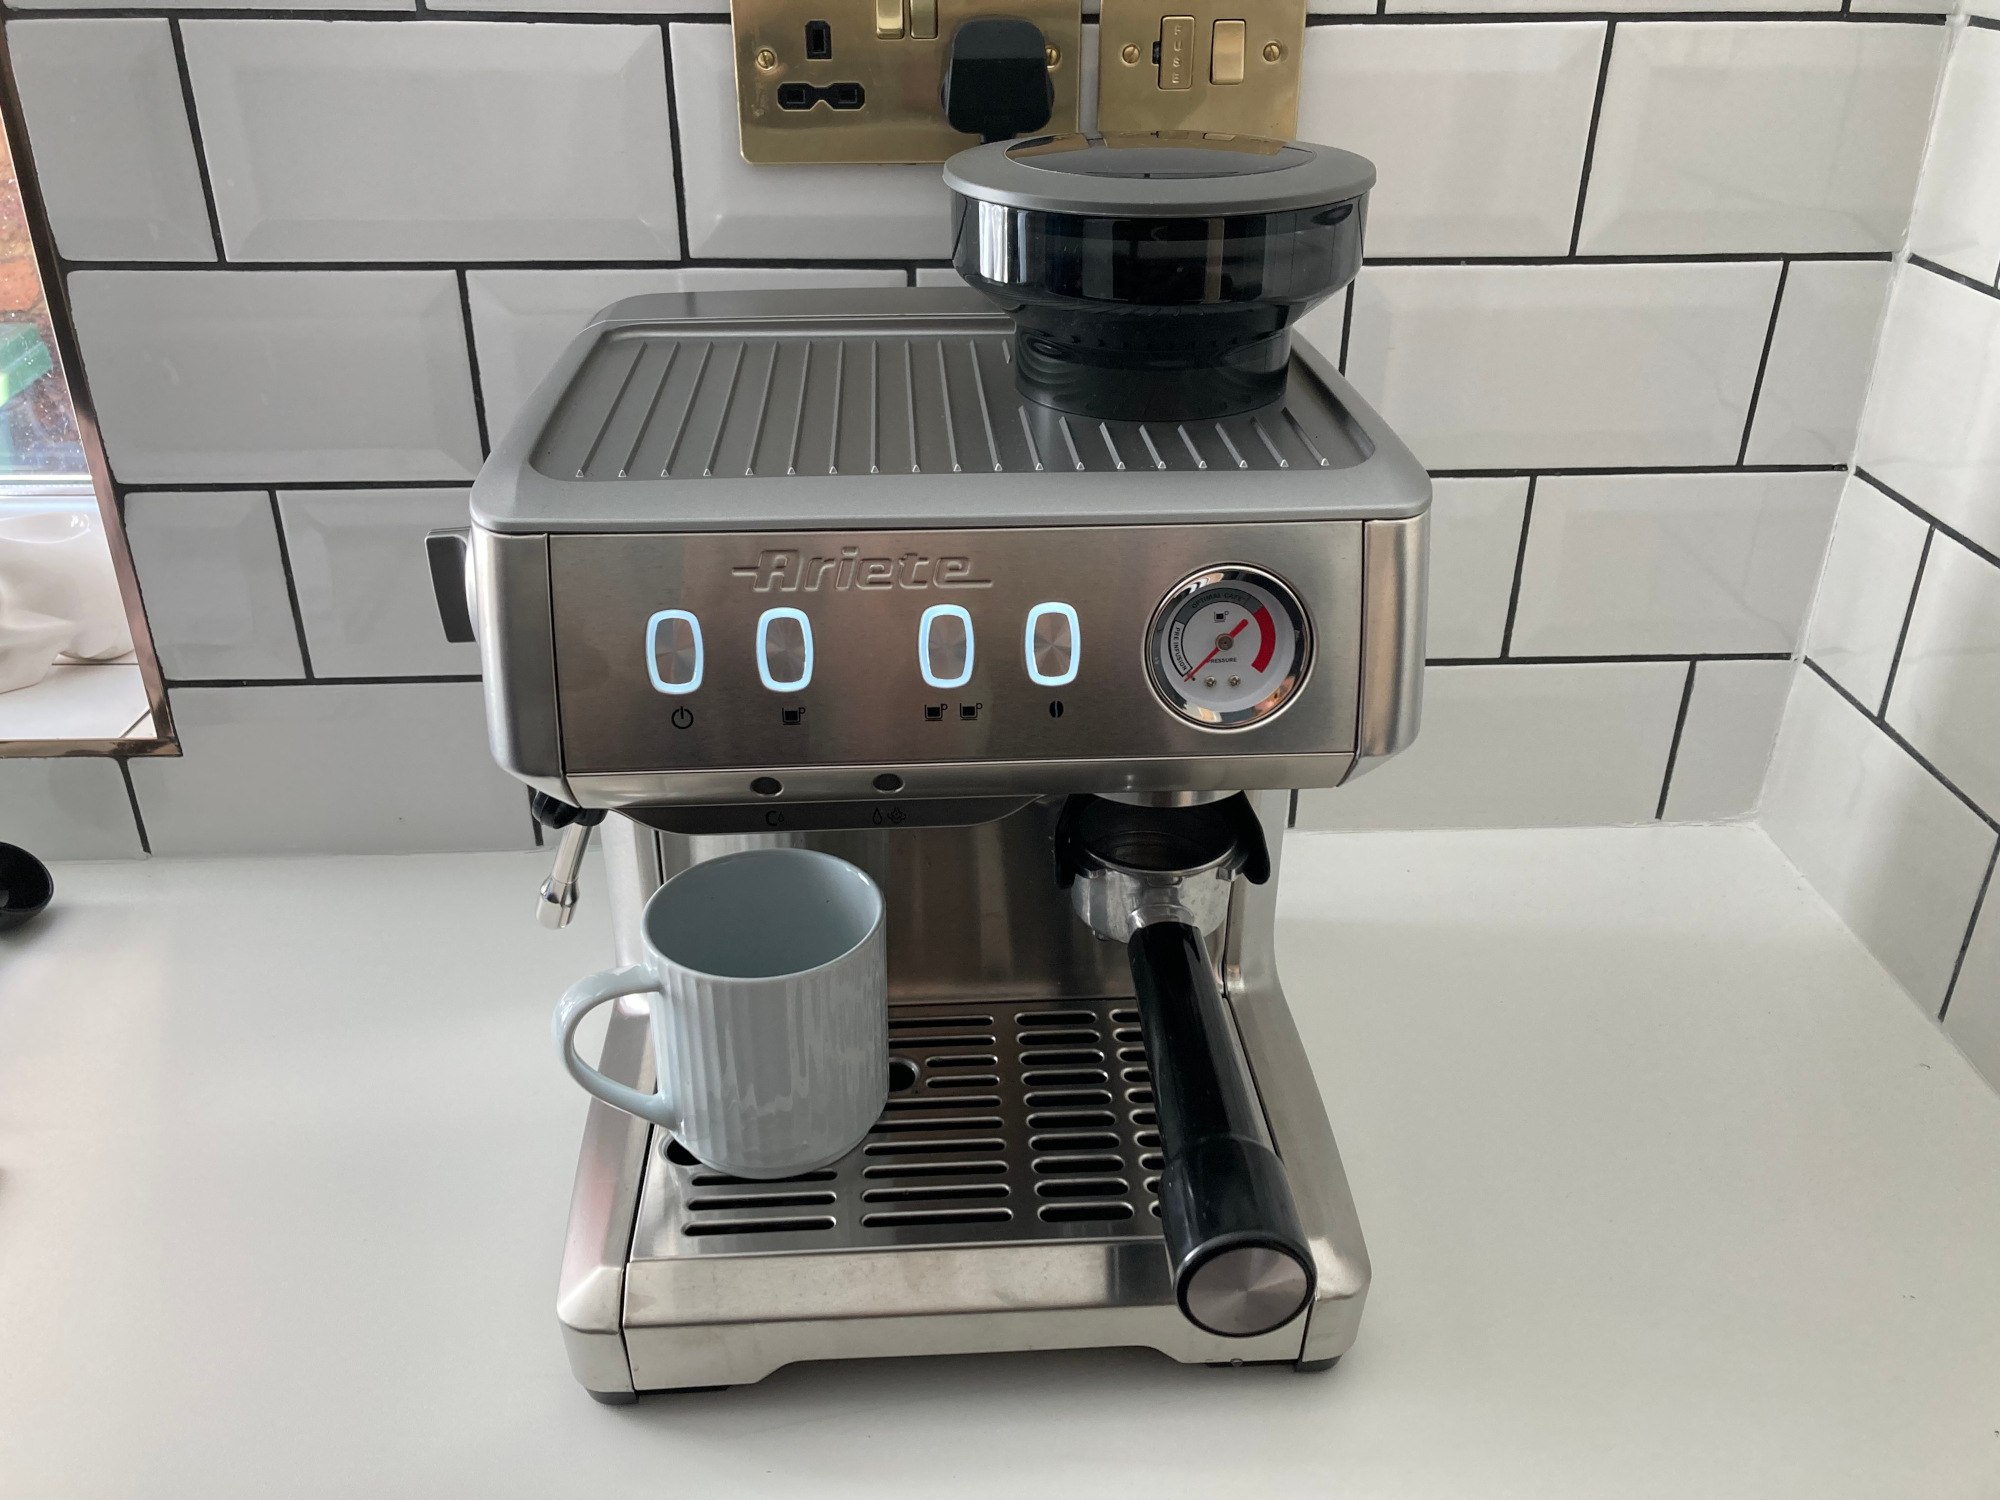 Espresso Machine: Getting Started